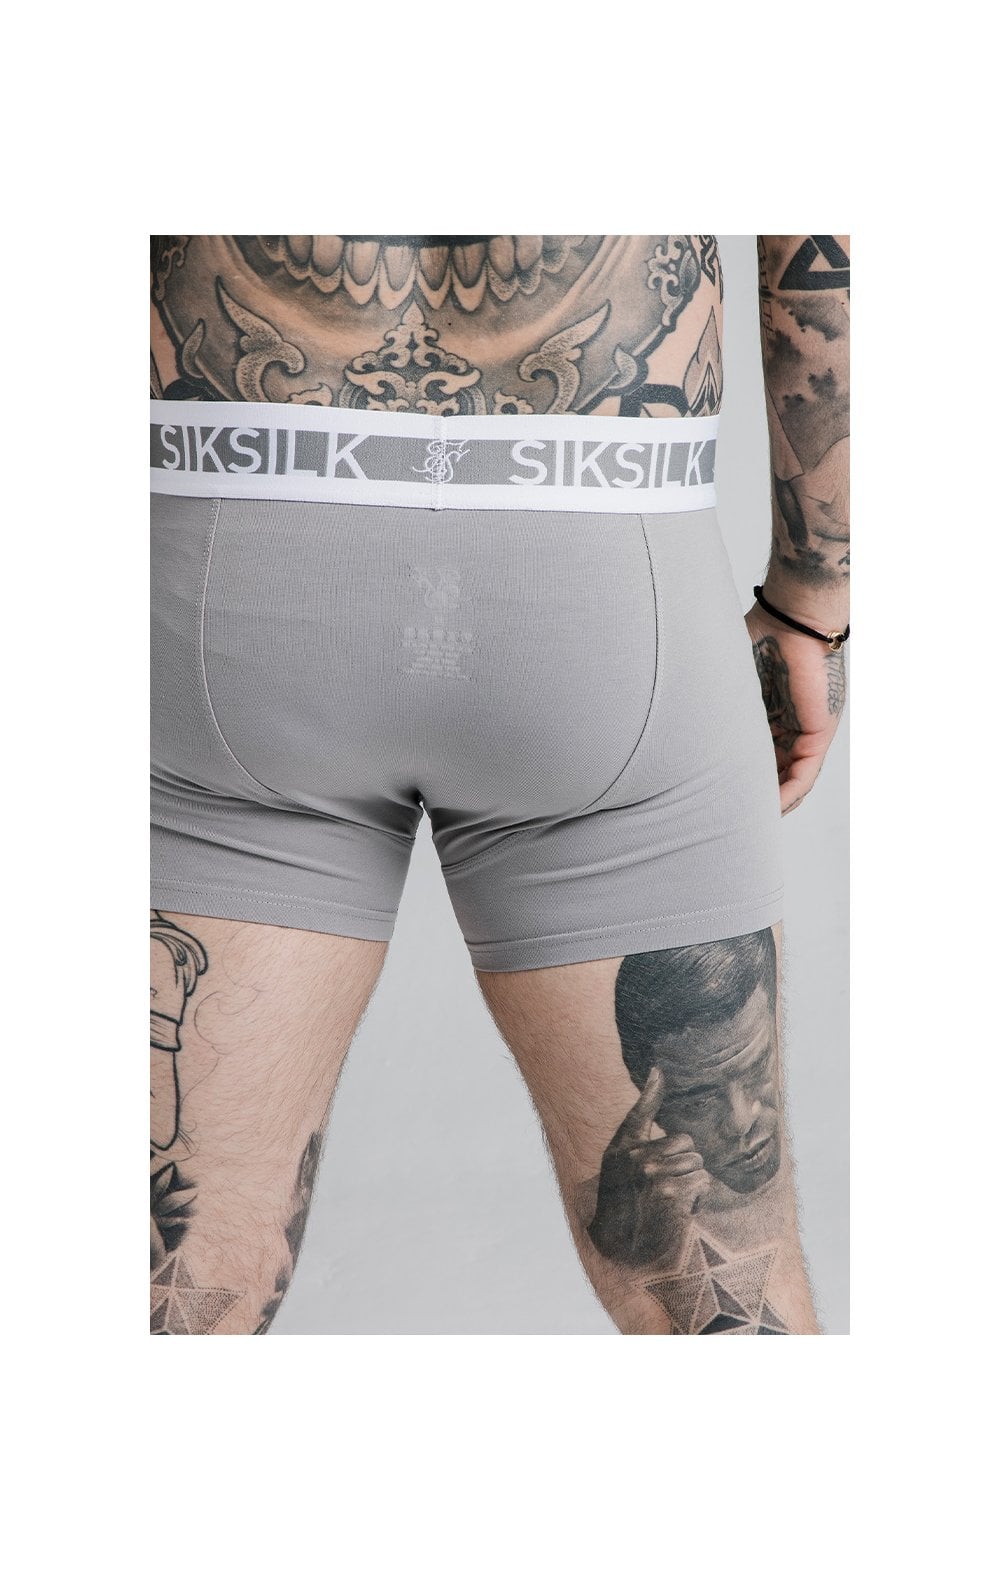 SikSilk Boxer Shorts (2 Pack) - Navy & Grey (7)